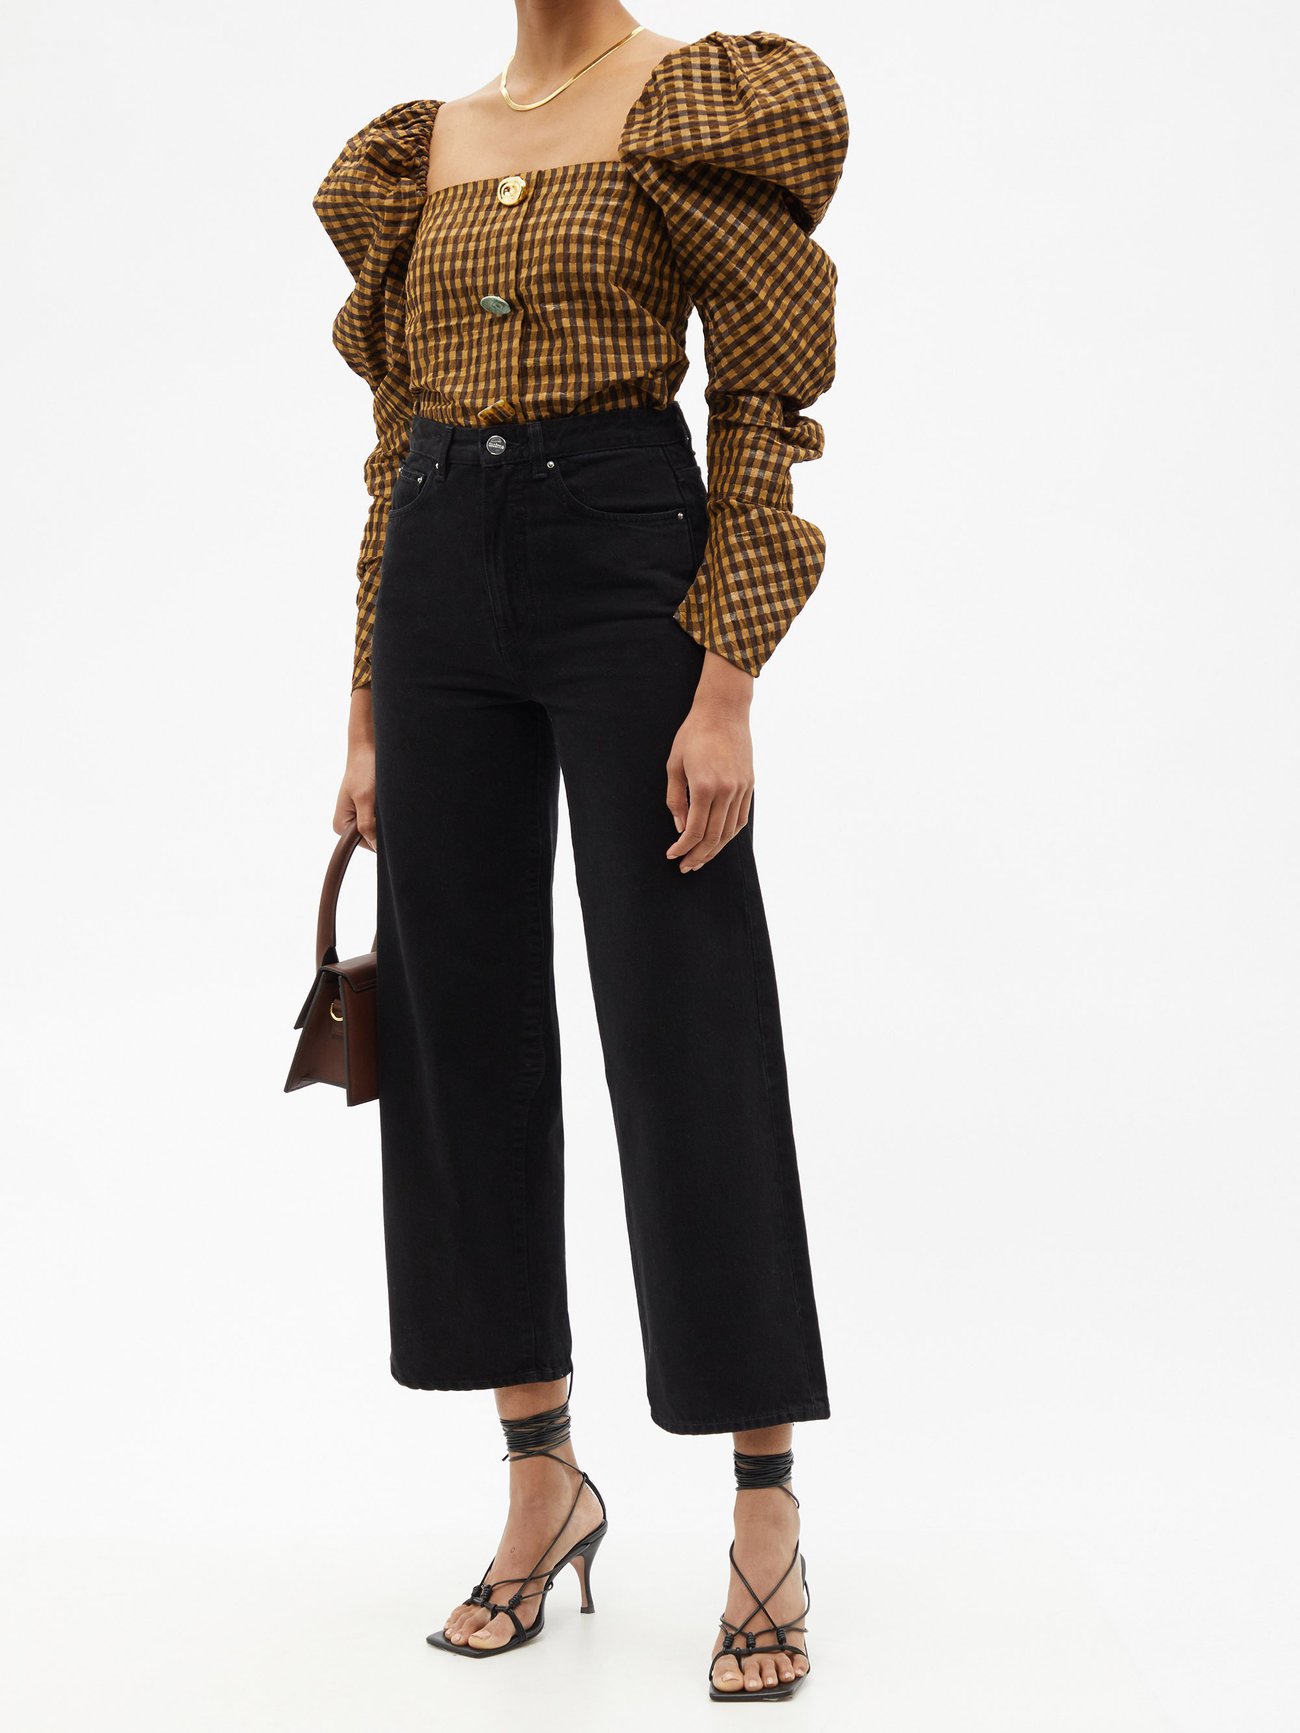 REJINA PYO Maya brown puff-sleeve seersucker blouse with mismatching buttons, £375